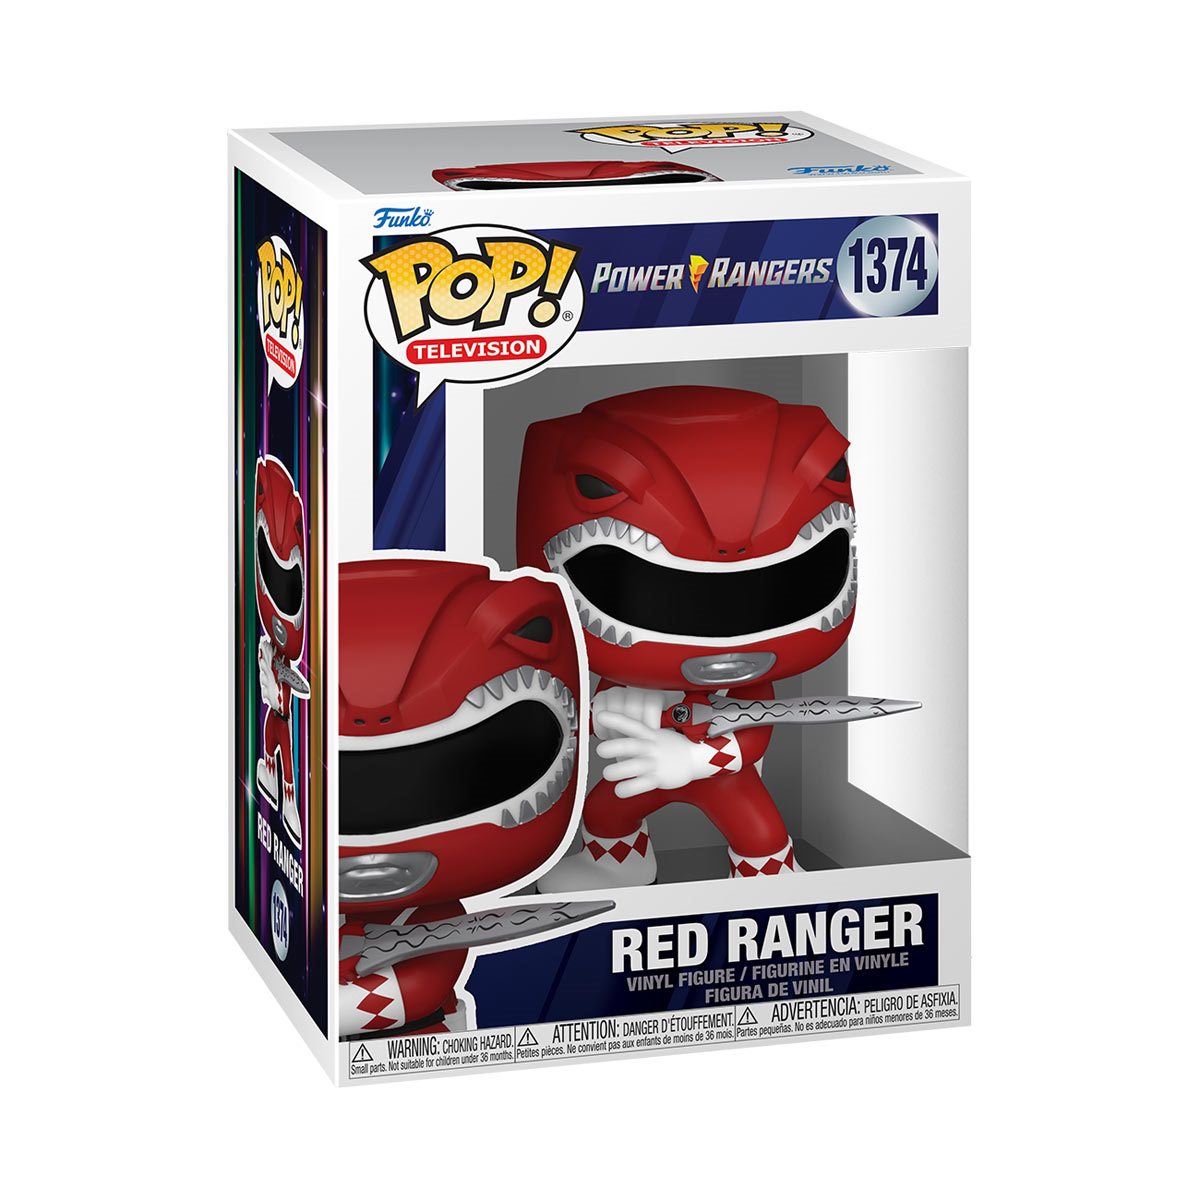 Mighty Morphin Red Ranger 30th Anniversary Pop! Vinyl Figure